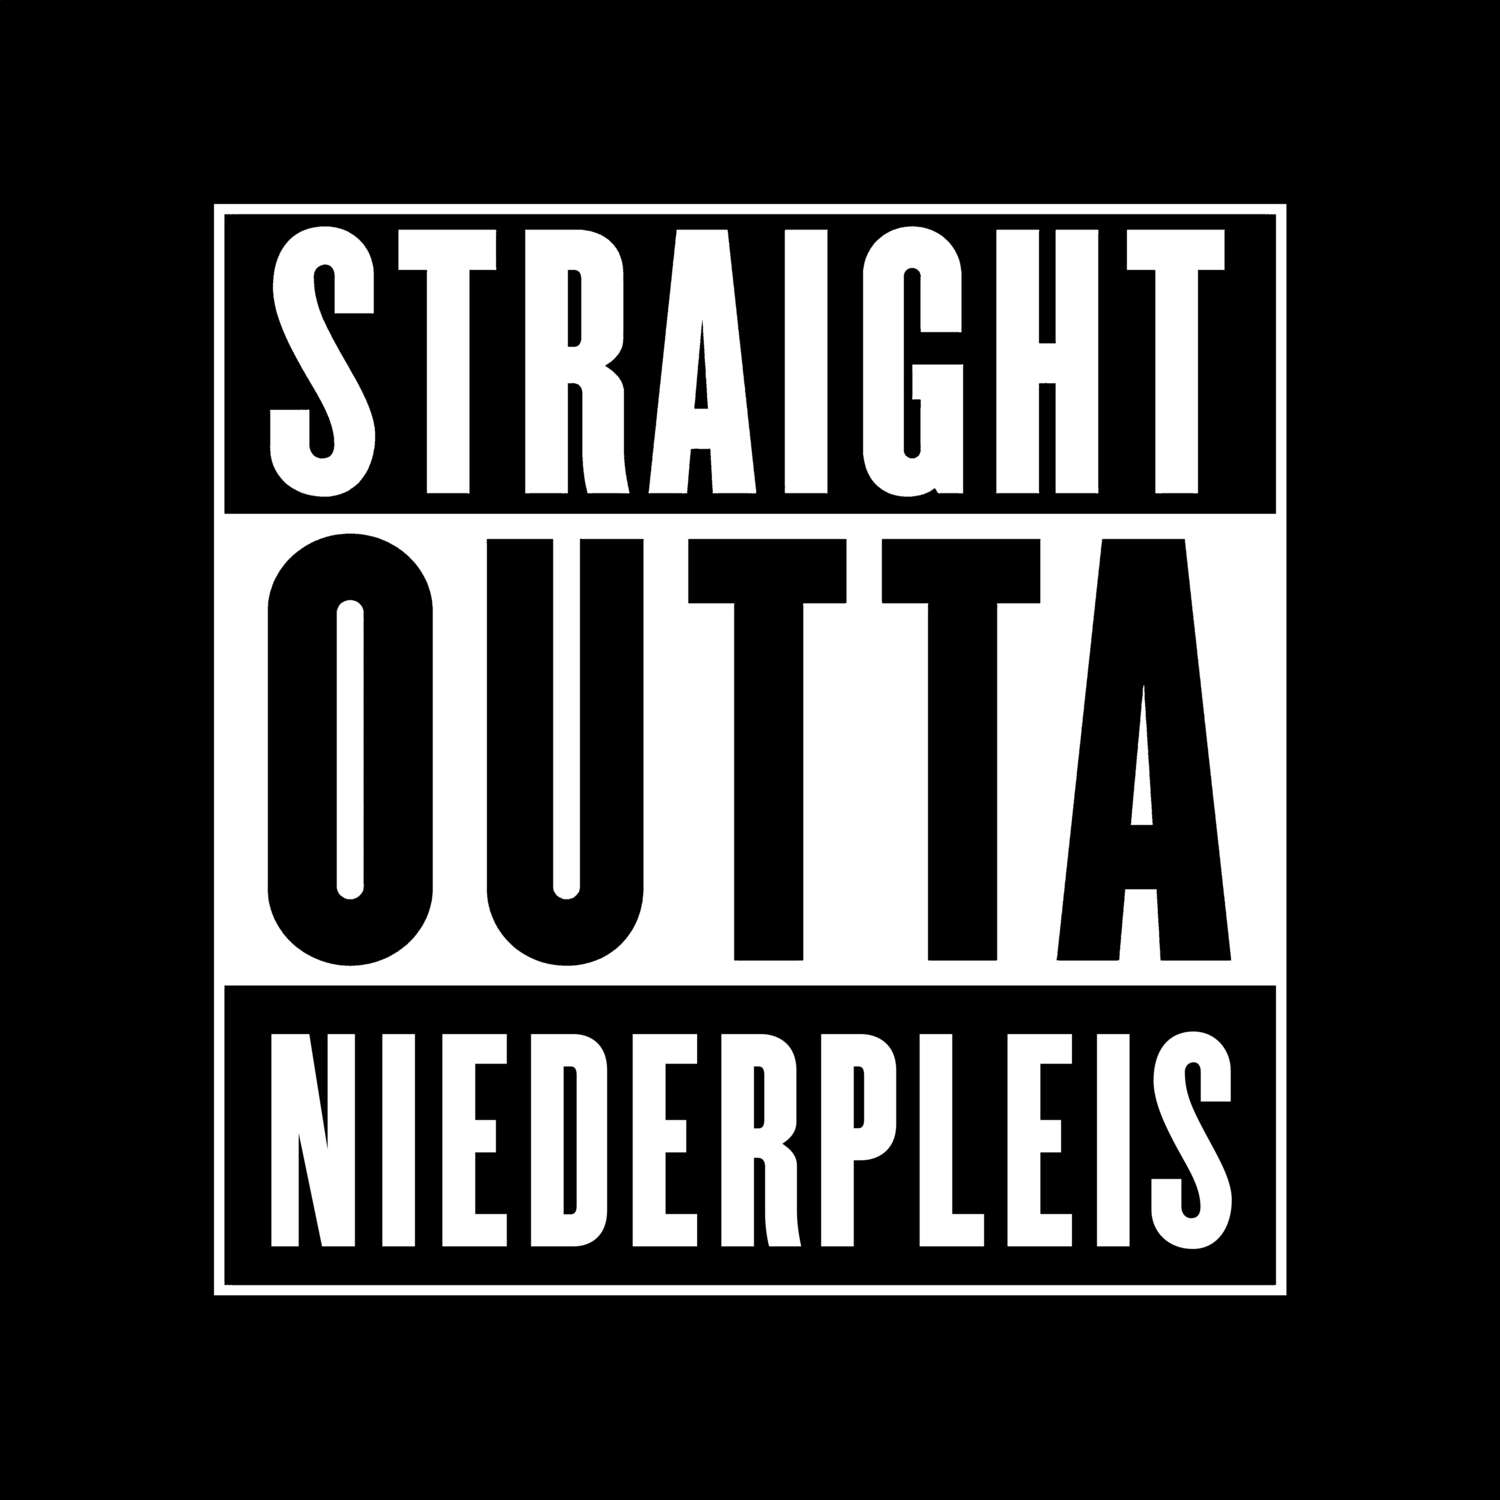 Niederpleis T-Shirt »Straight Outta«